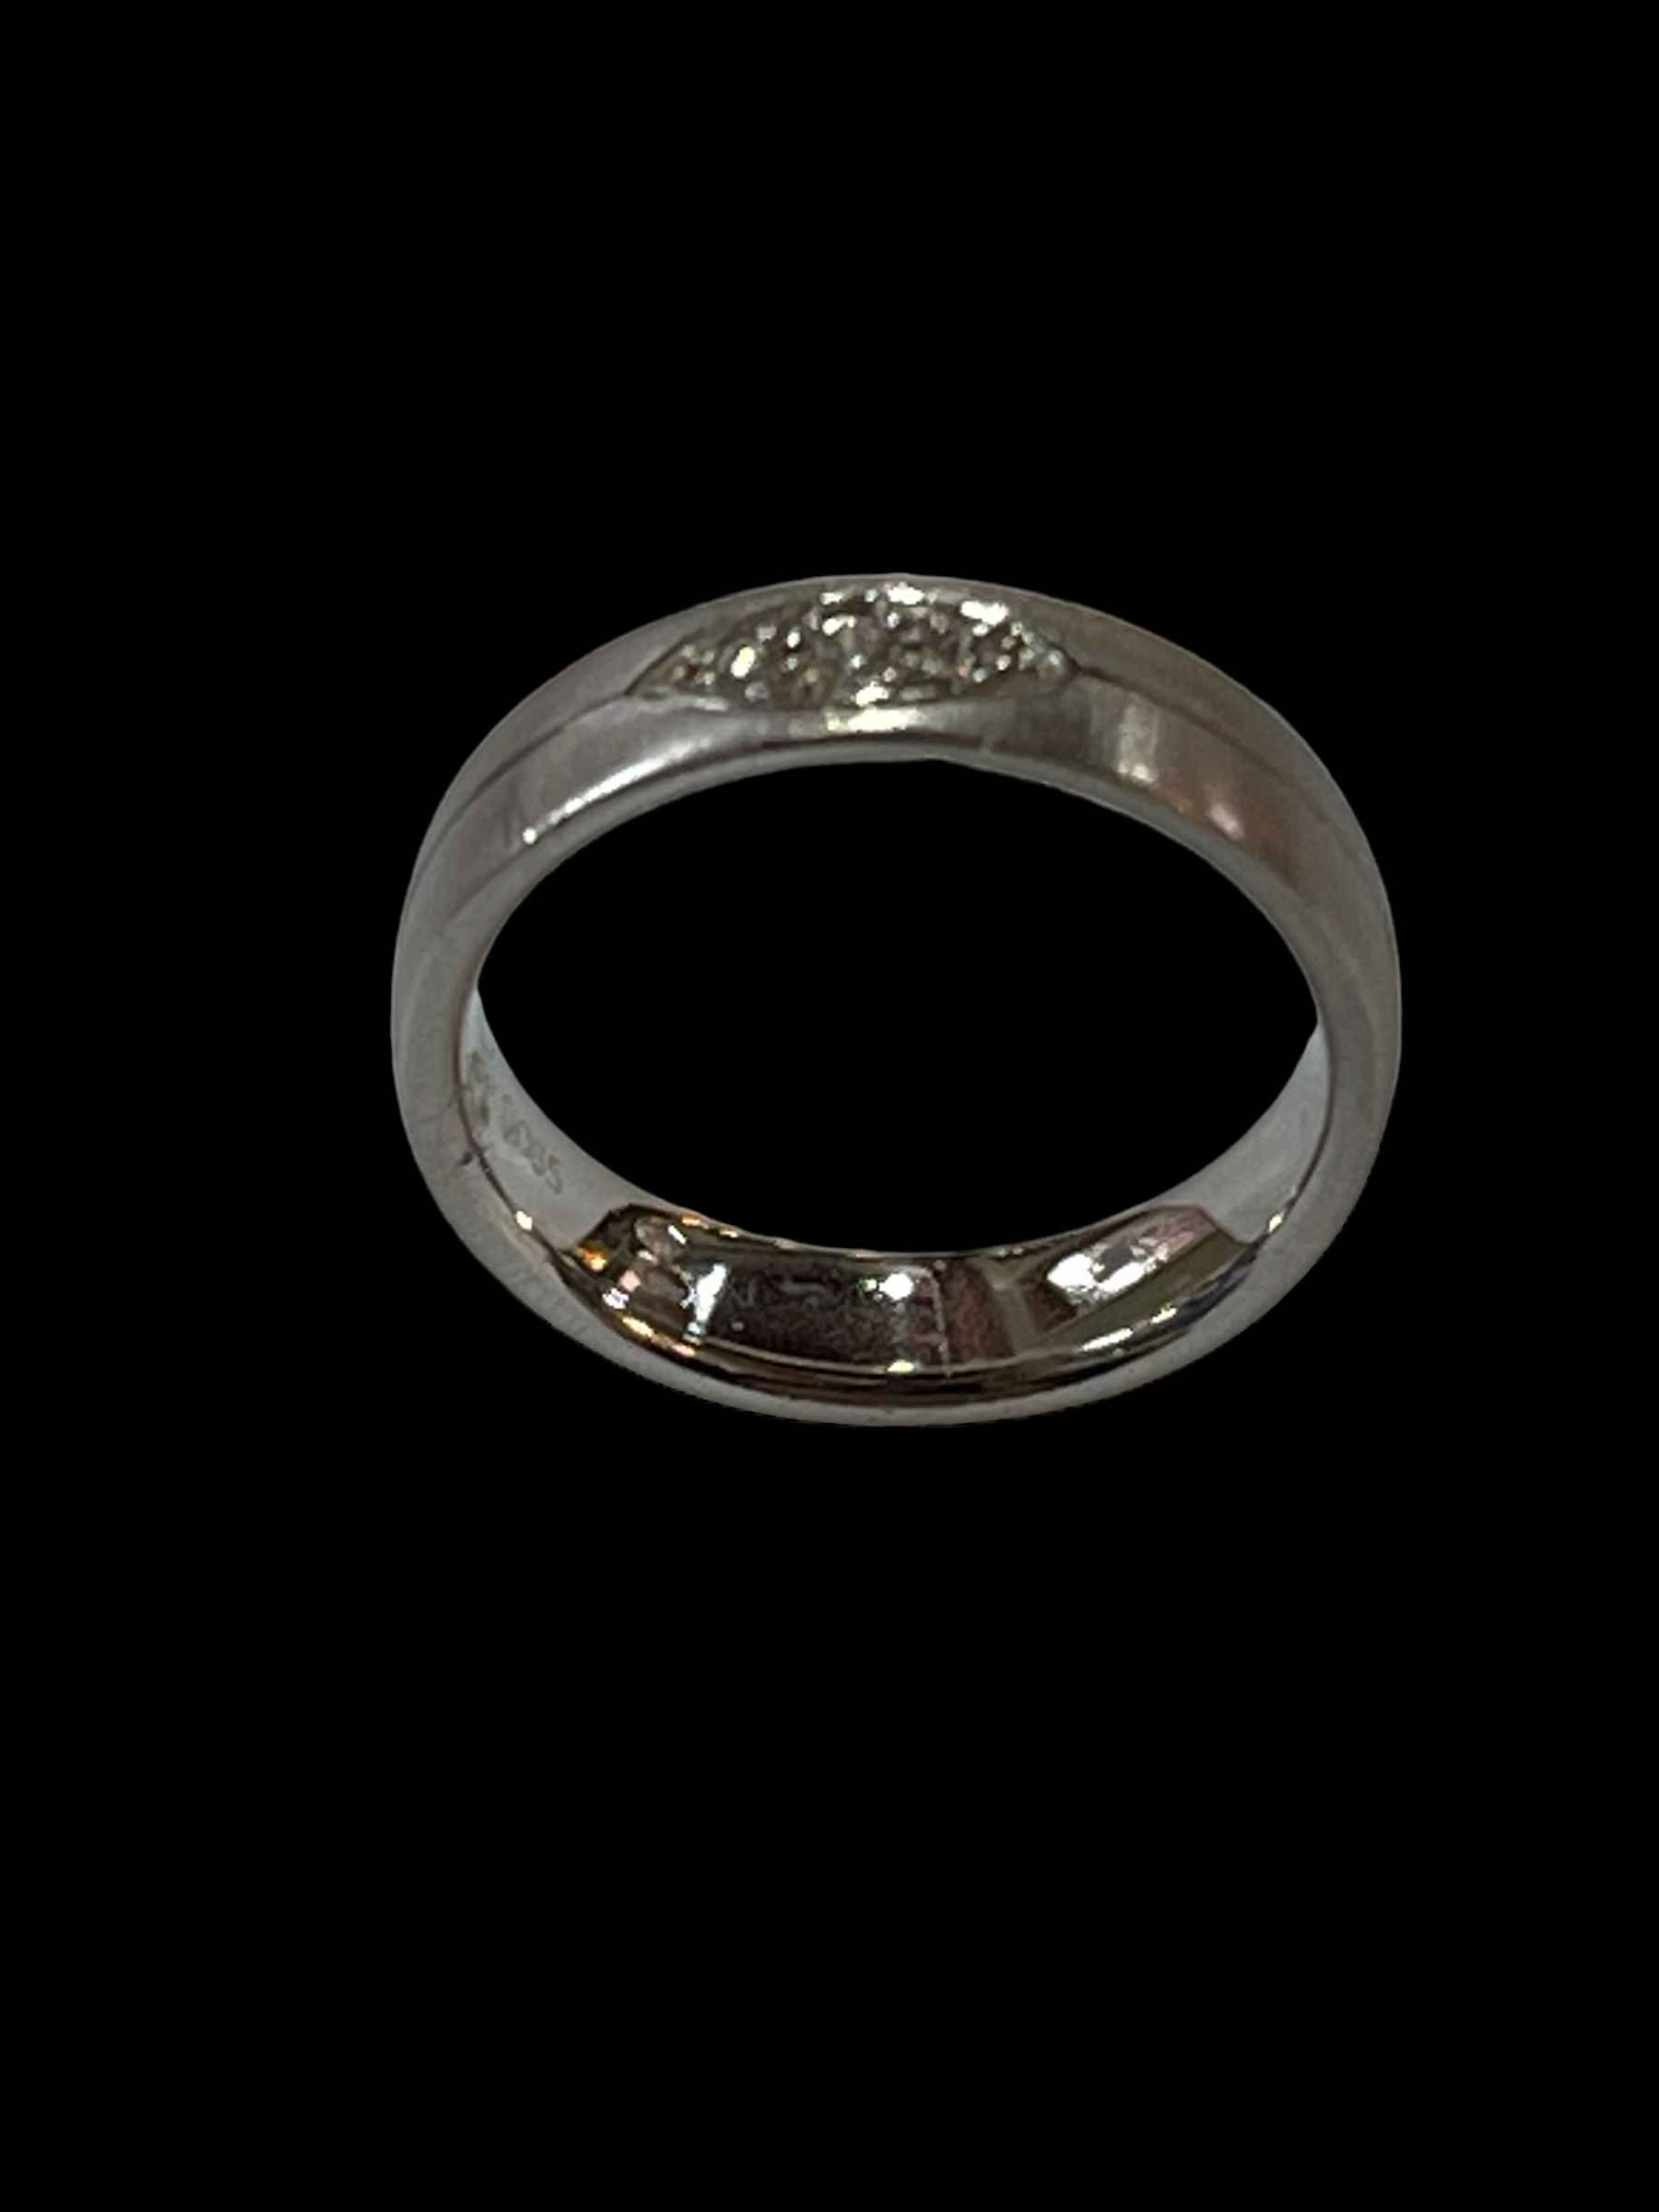 18 carat white gold three stone diamond wedding band, size N. - Image 2 of 2